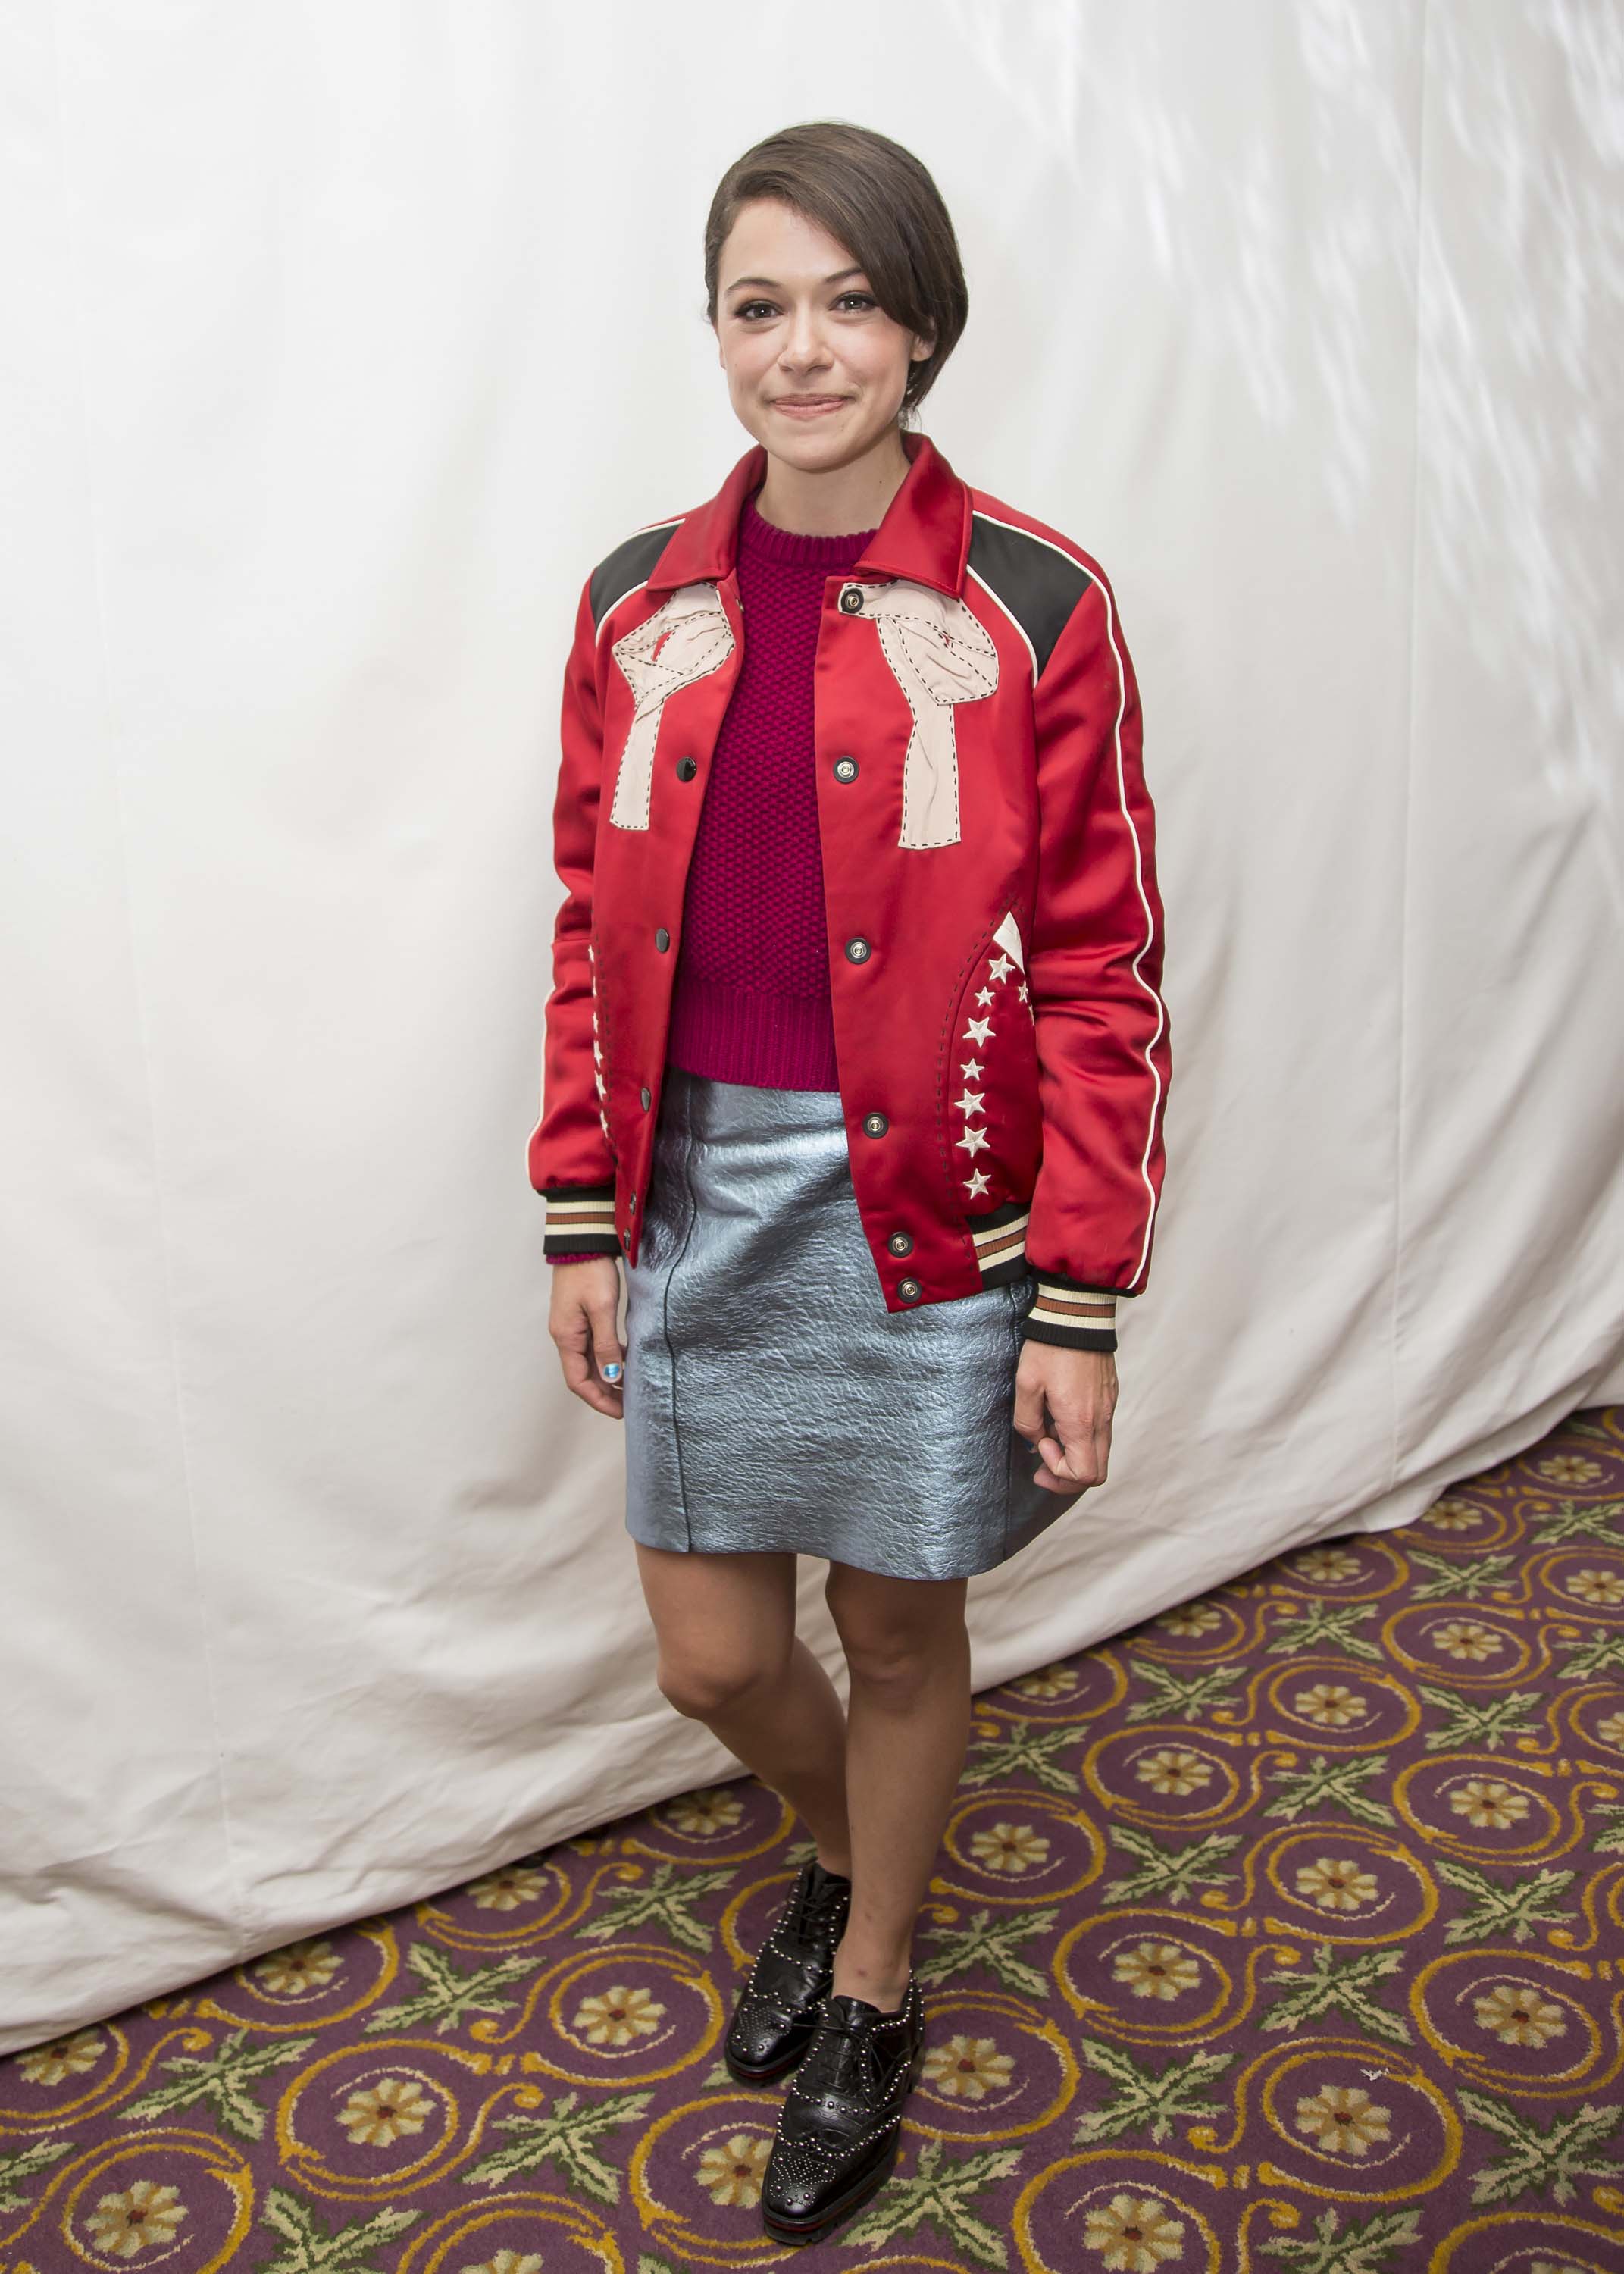 Tatiana Maslany attends Press conference during 42nd Toronto International Film Festival